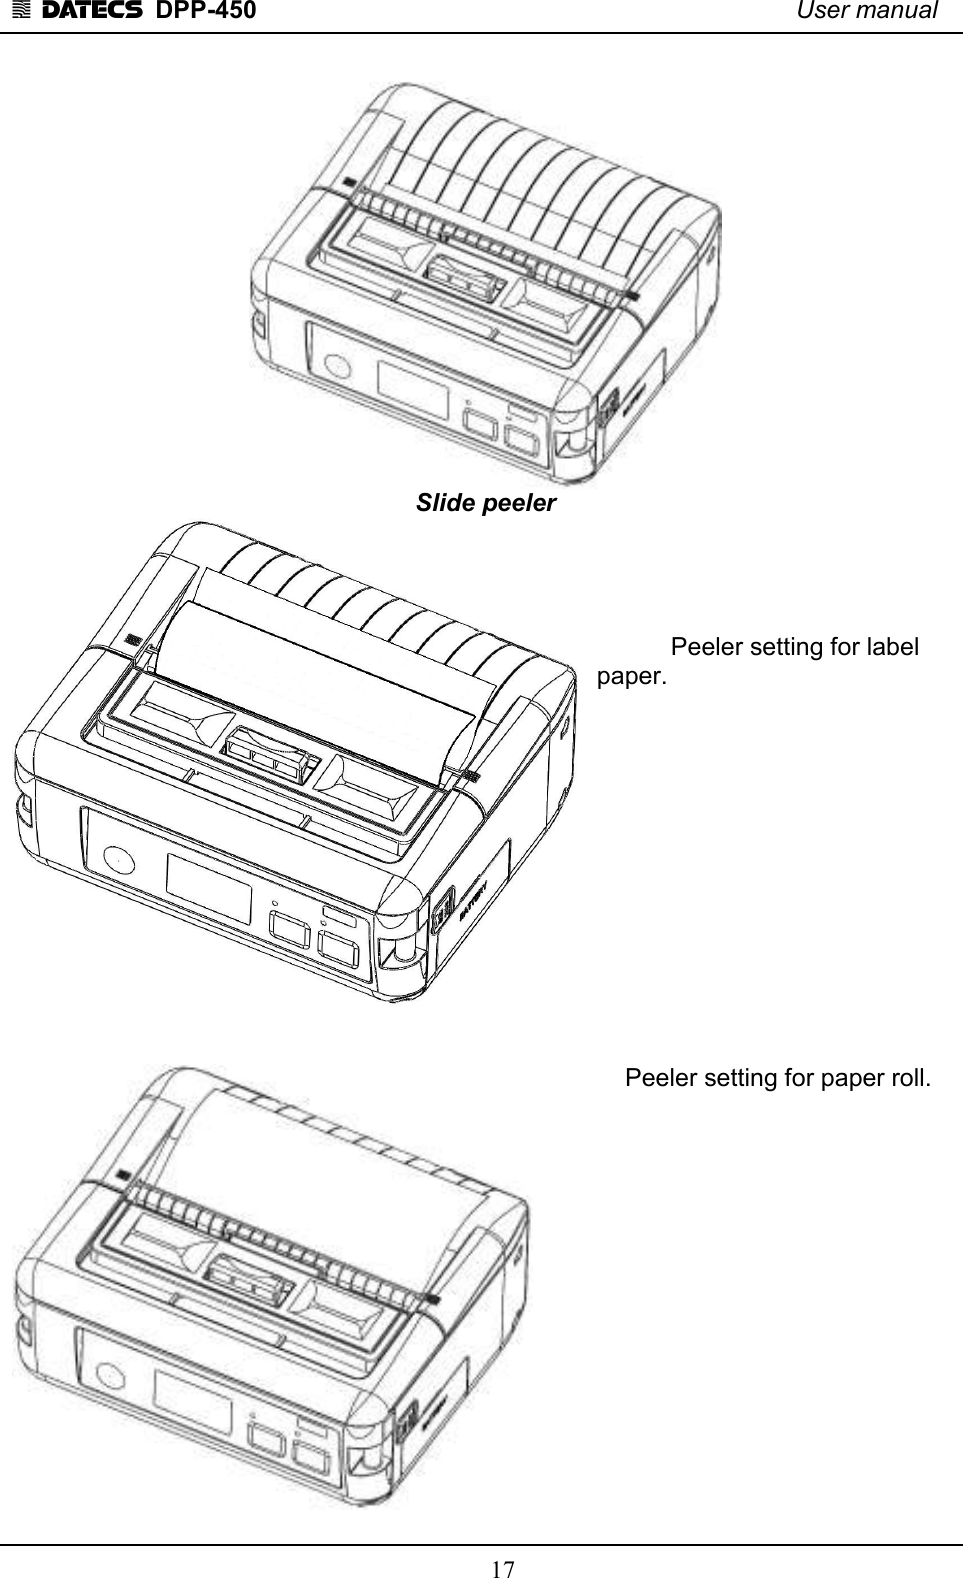 1 DATECS  DPP-450    User manual     17   Slide peeler       Peeler setting for label paper.                  Peeler setting for paper roll.                